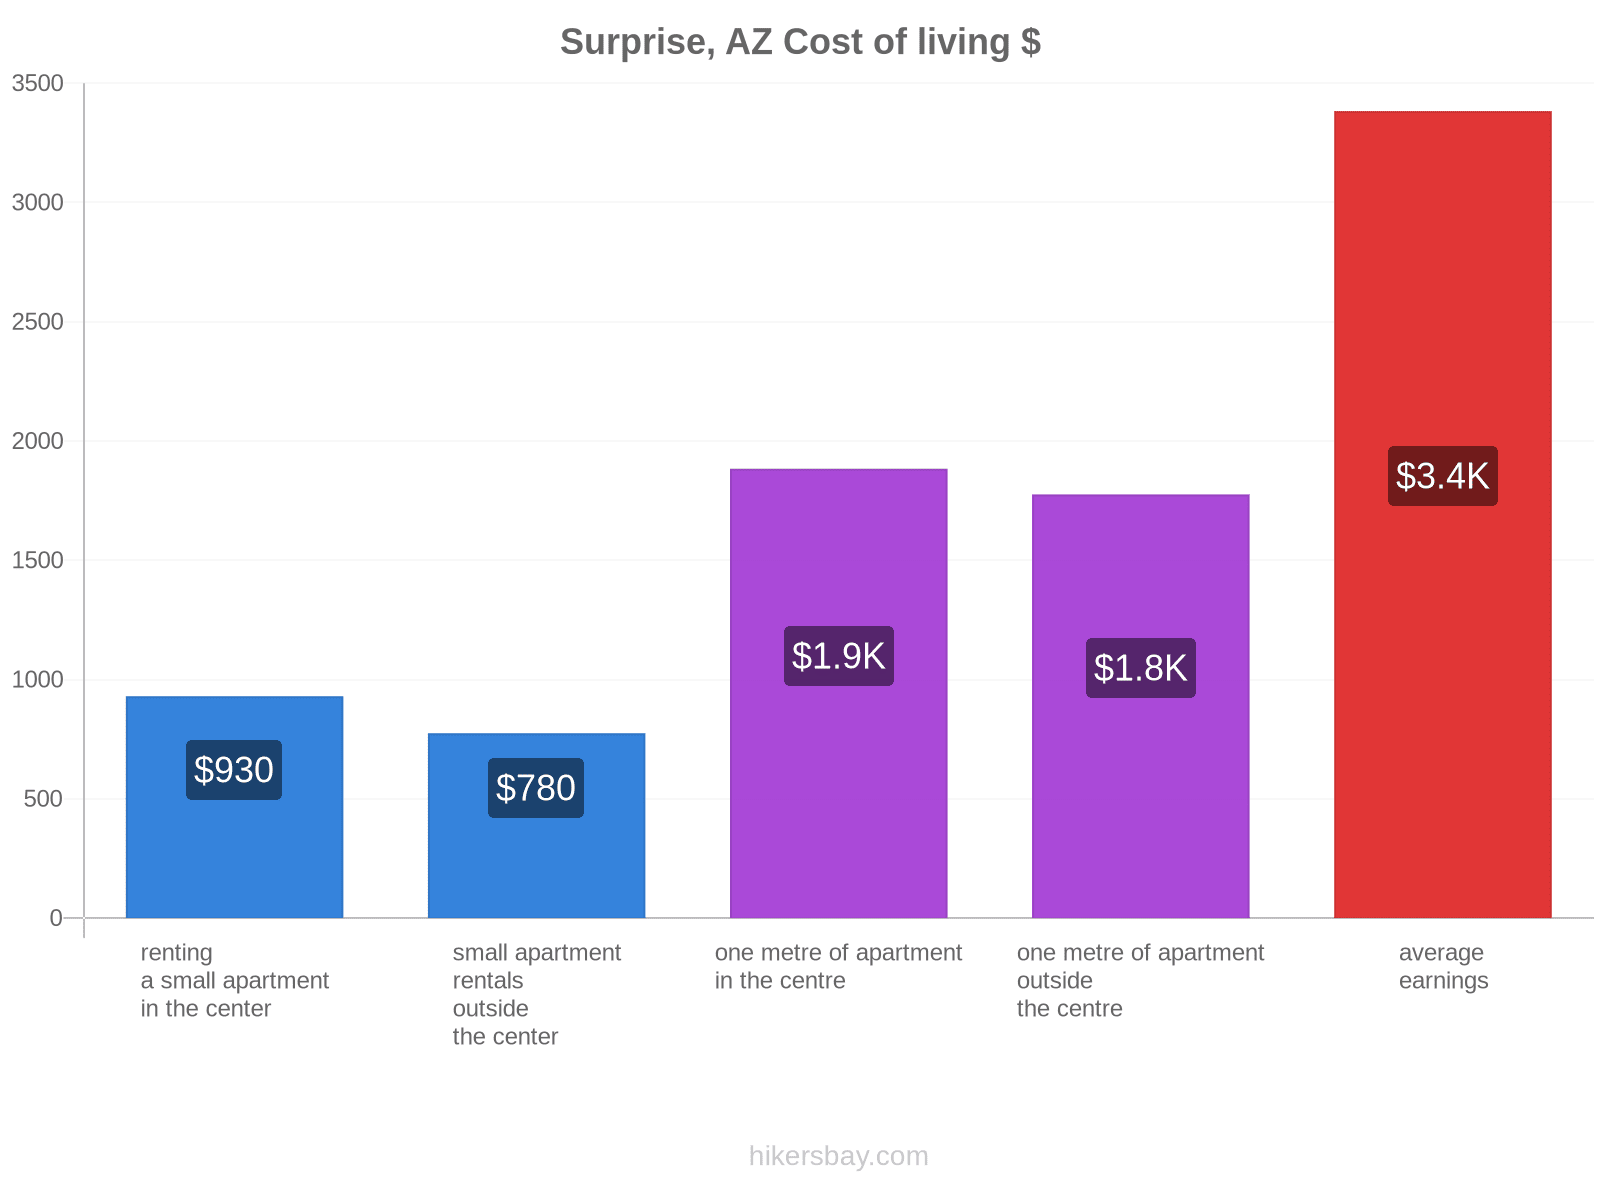 Surprise, AZ cost of living hikersbay.com